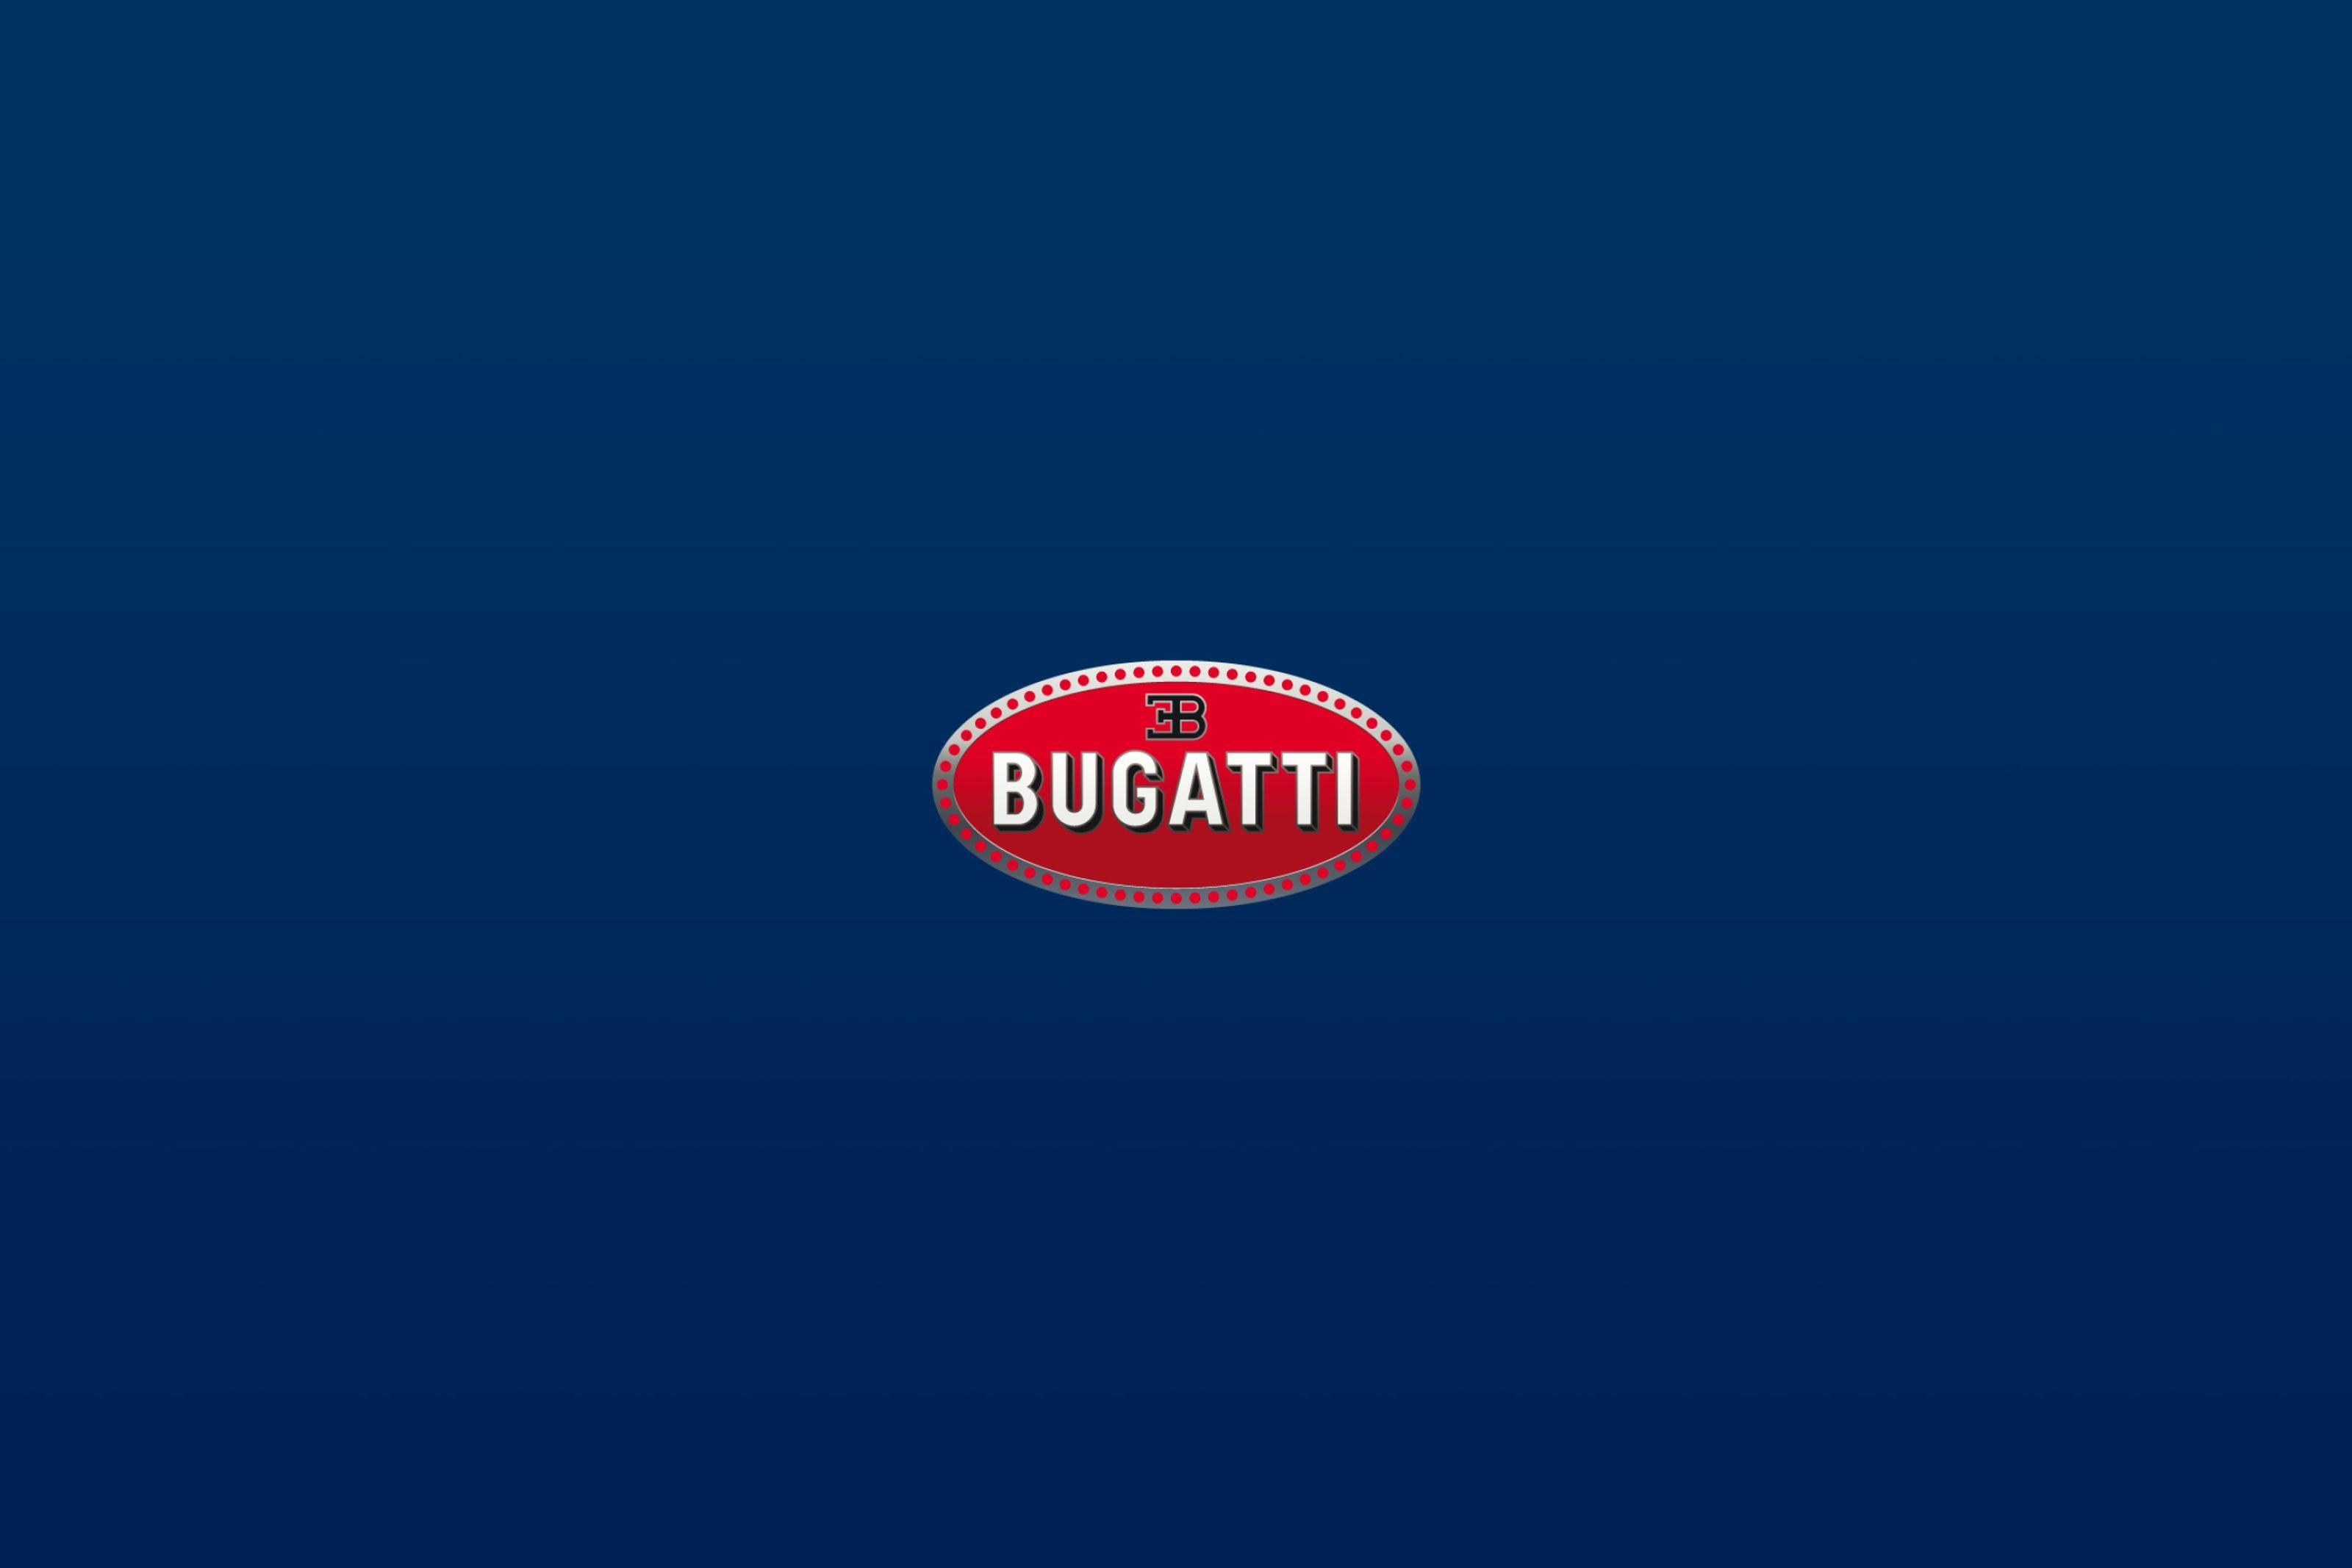 2015 Salon Rétromobile: Bugatti celebrates all eras of its hundred years of history